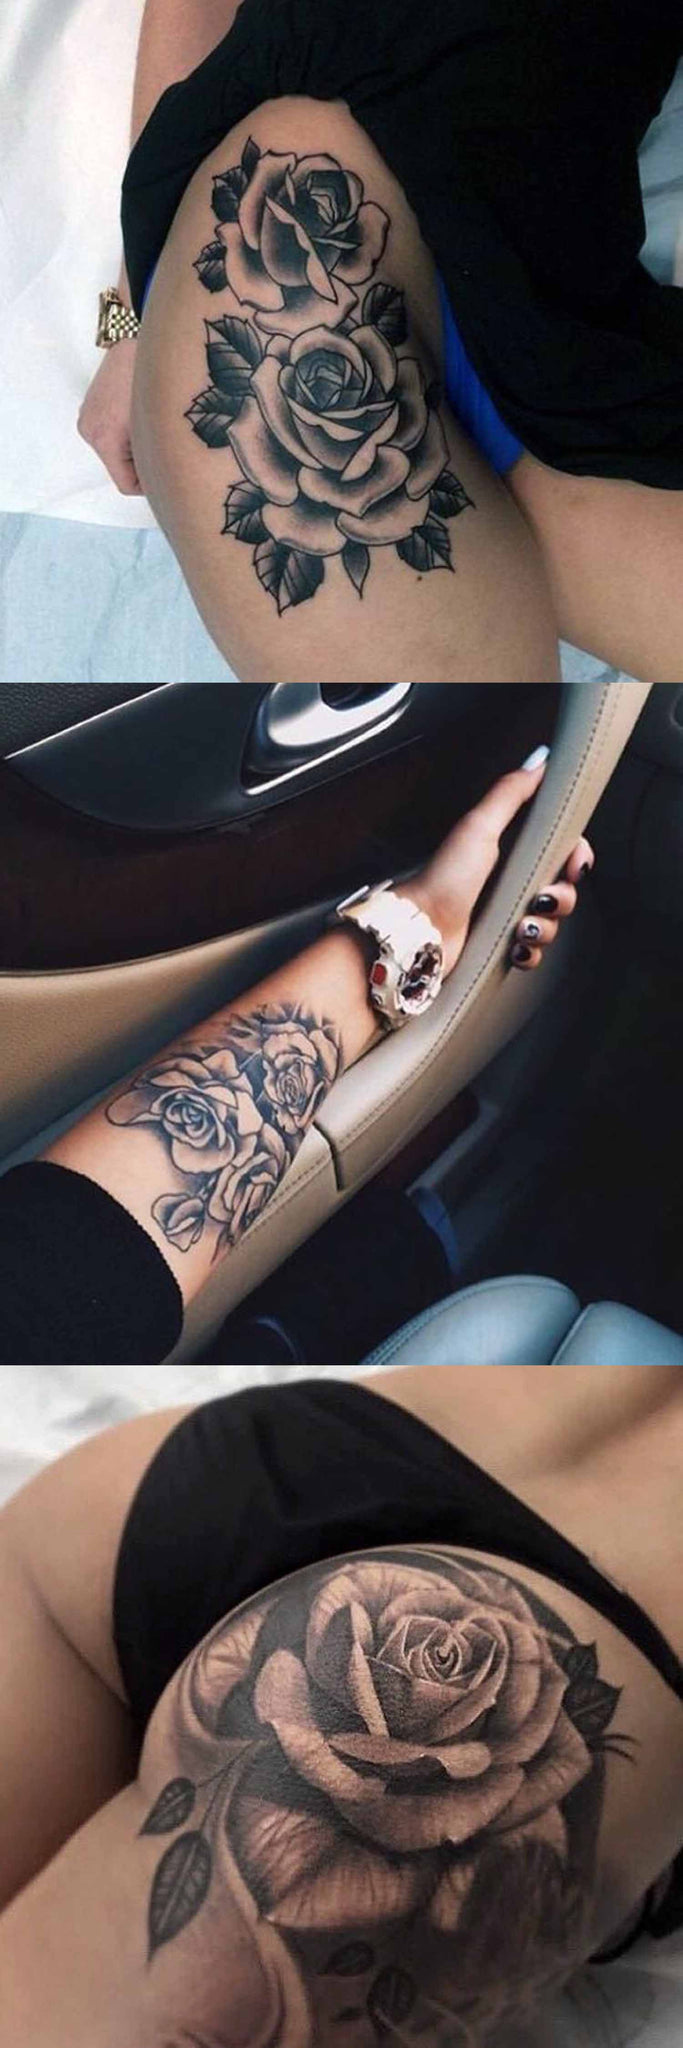 Pin by ronieri goncalves on Desenho tatuagem | Hip thigh tattoos, Hip  tattoos women, Hip tattoo